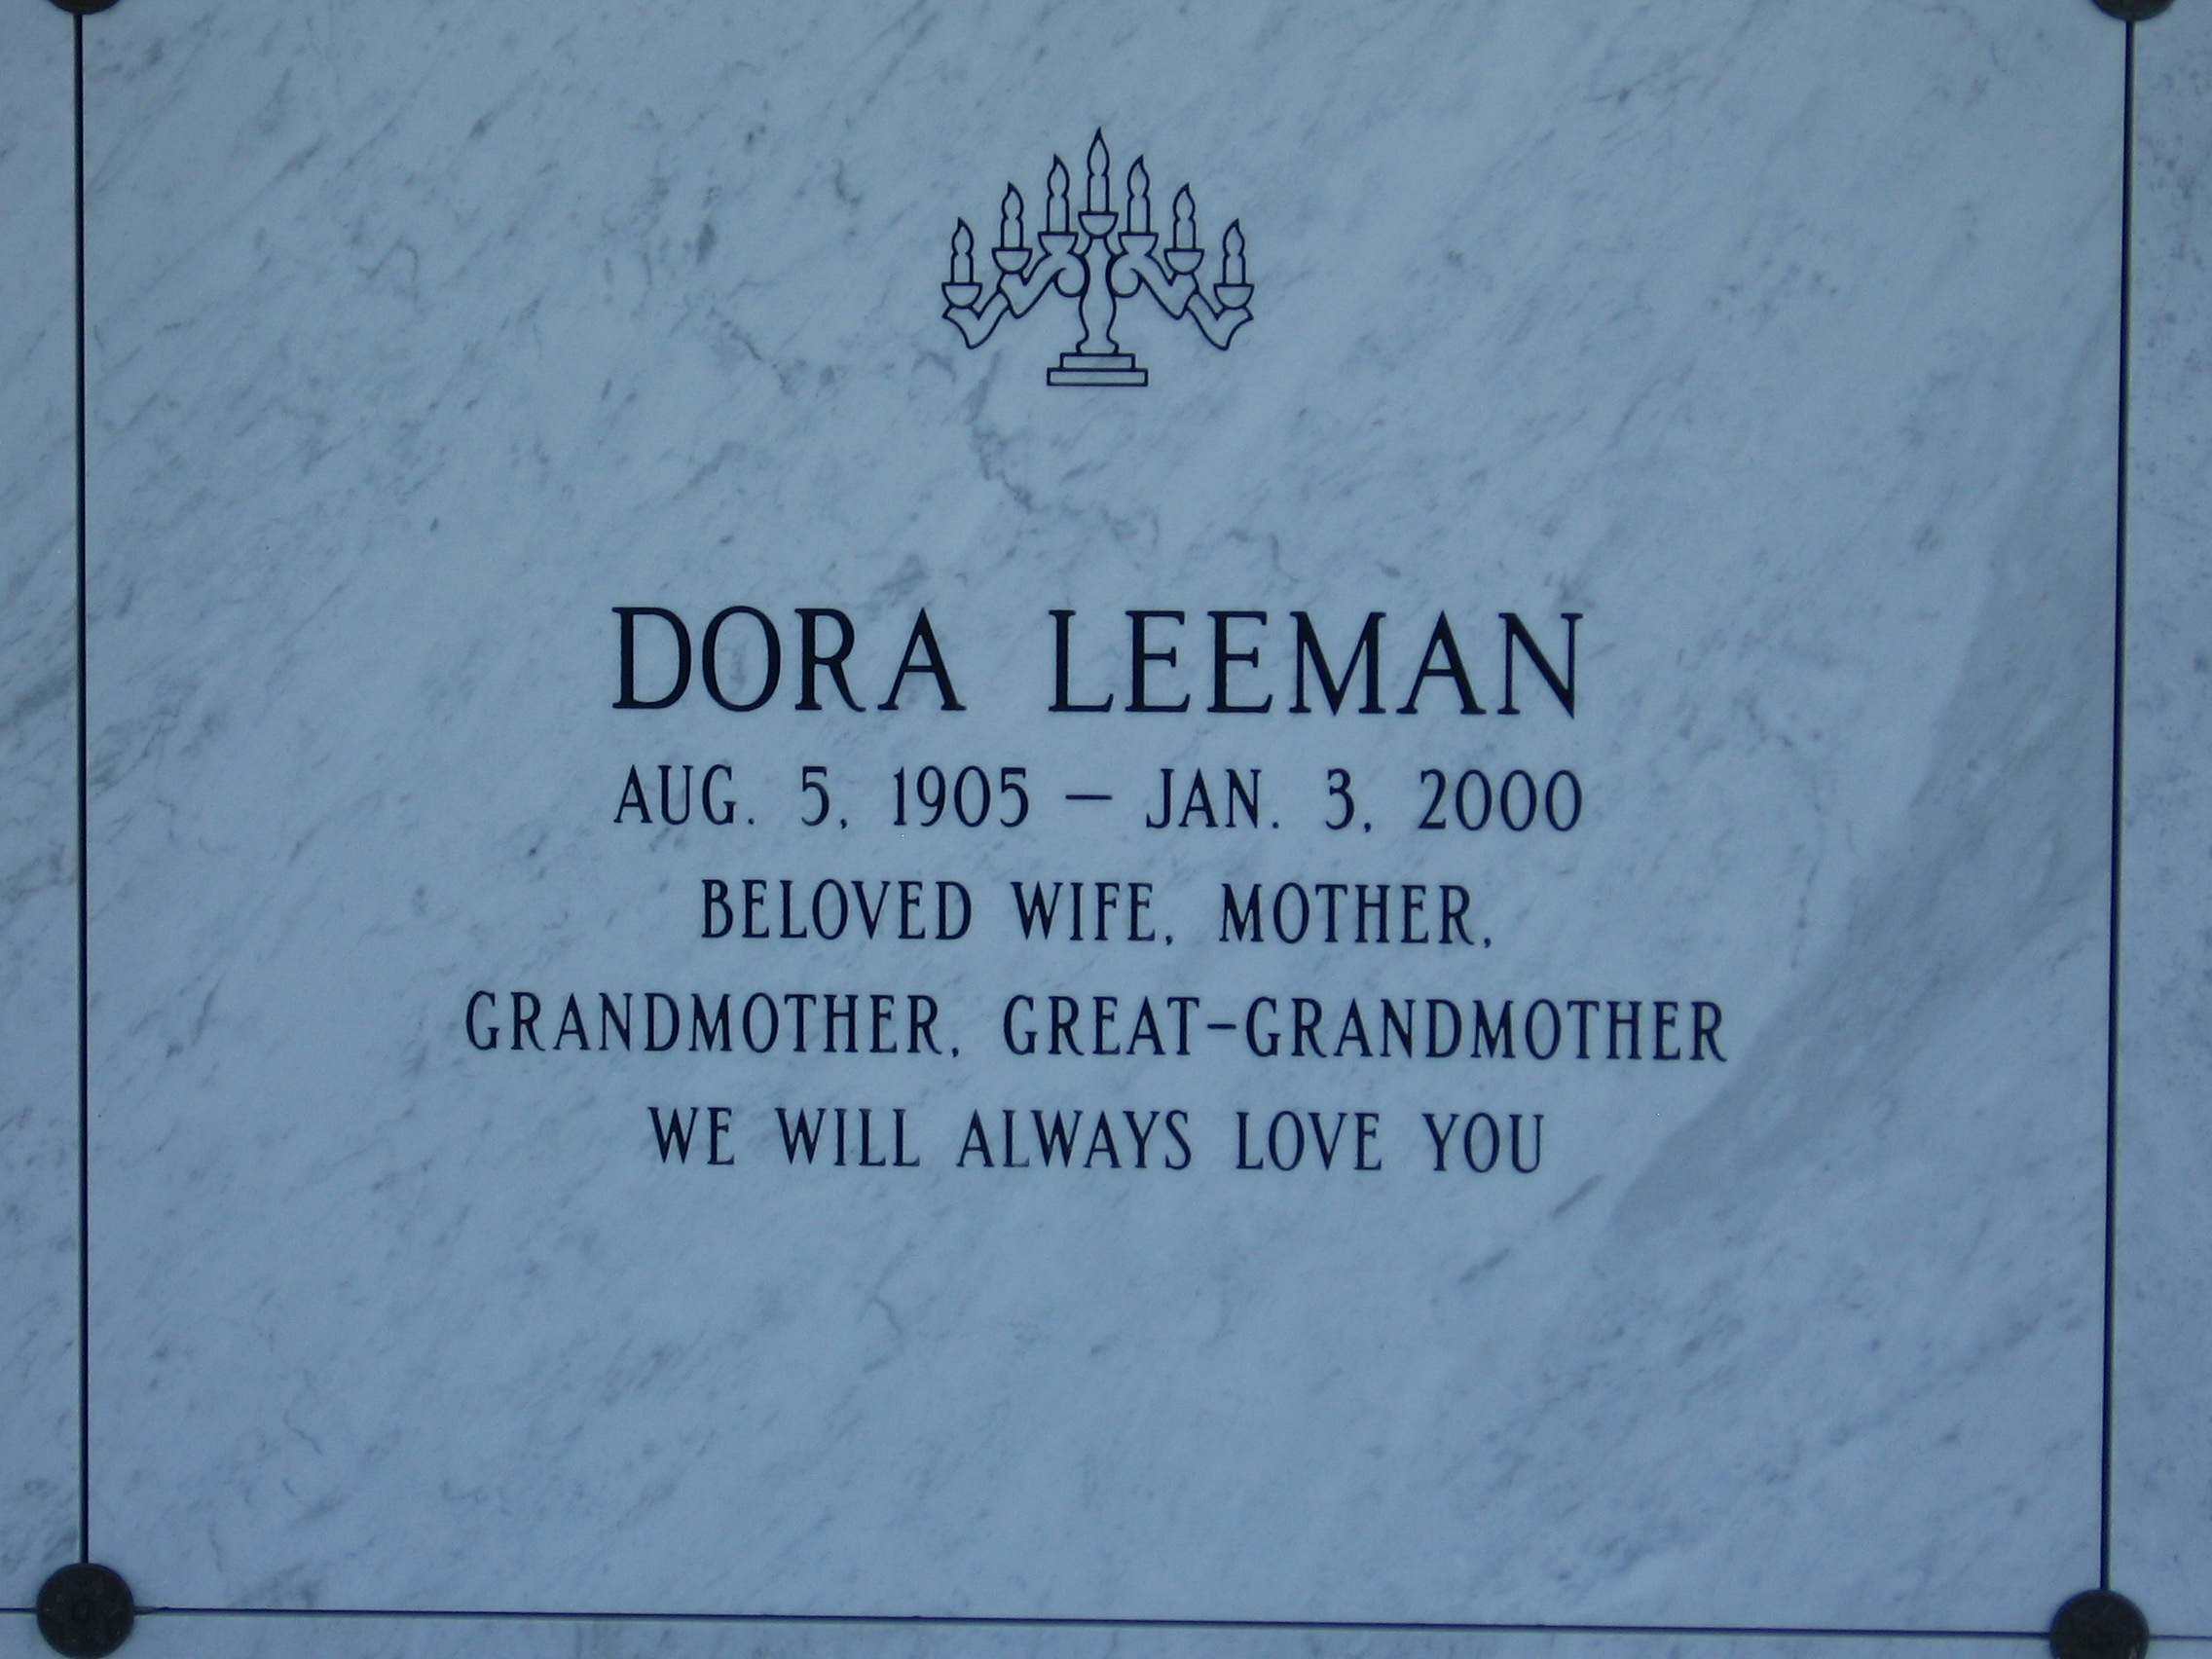 Dora Leeman